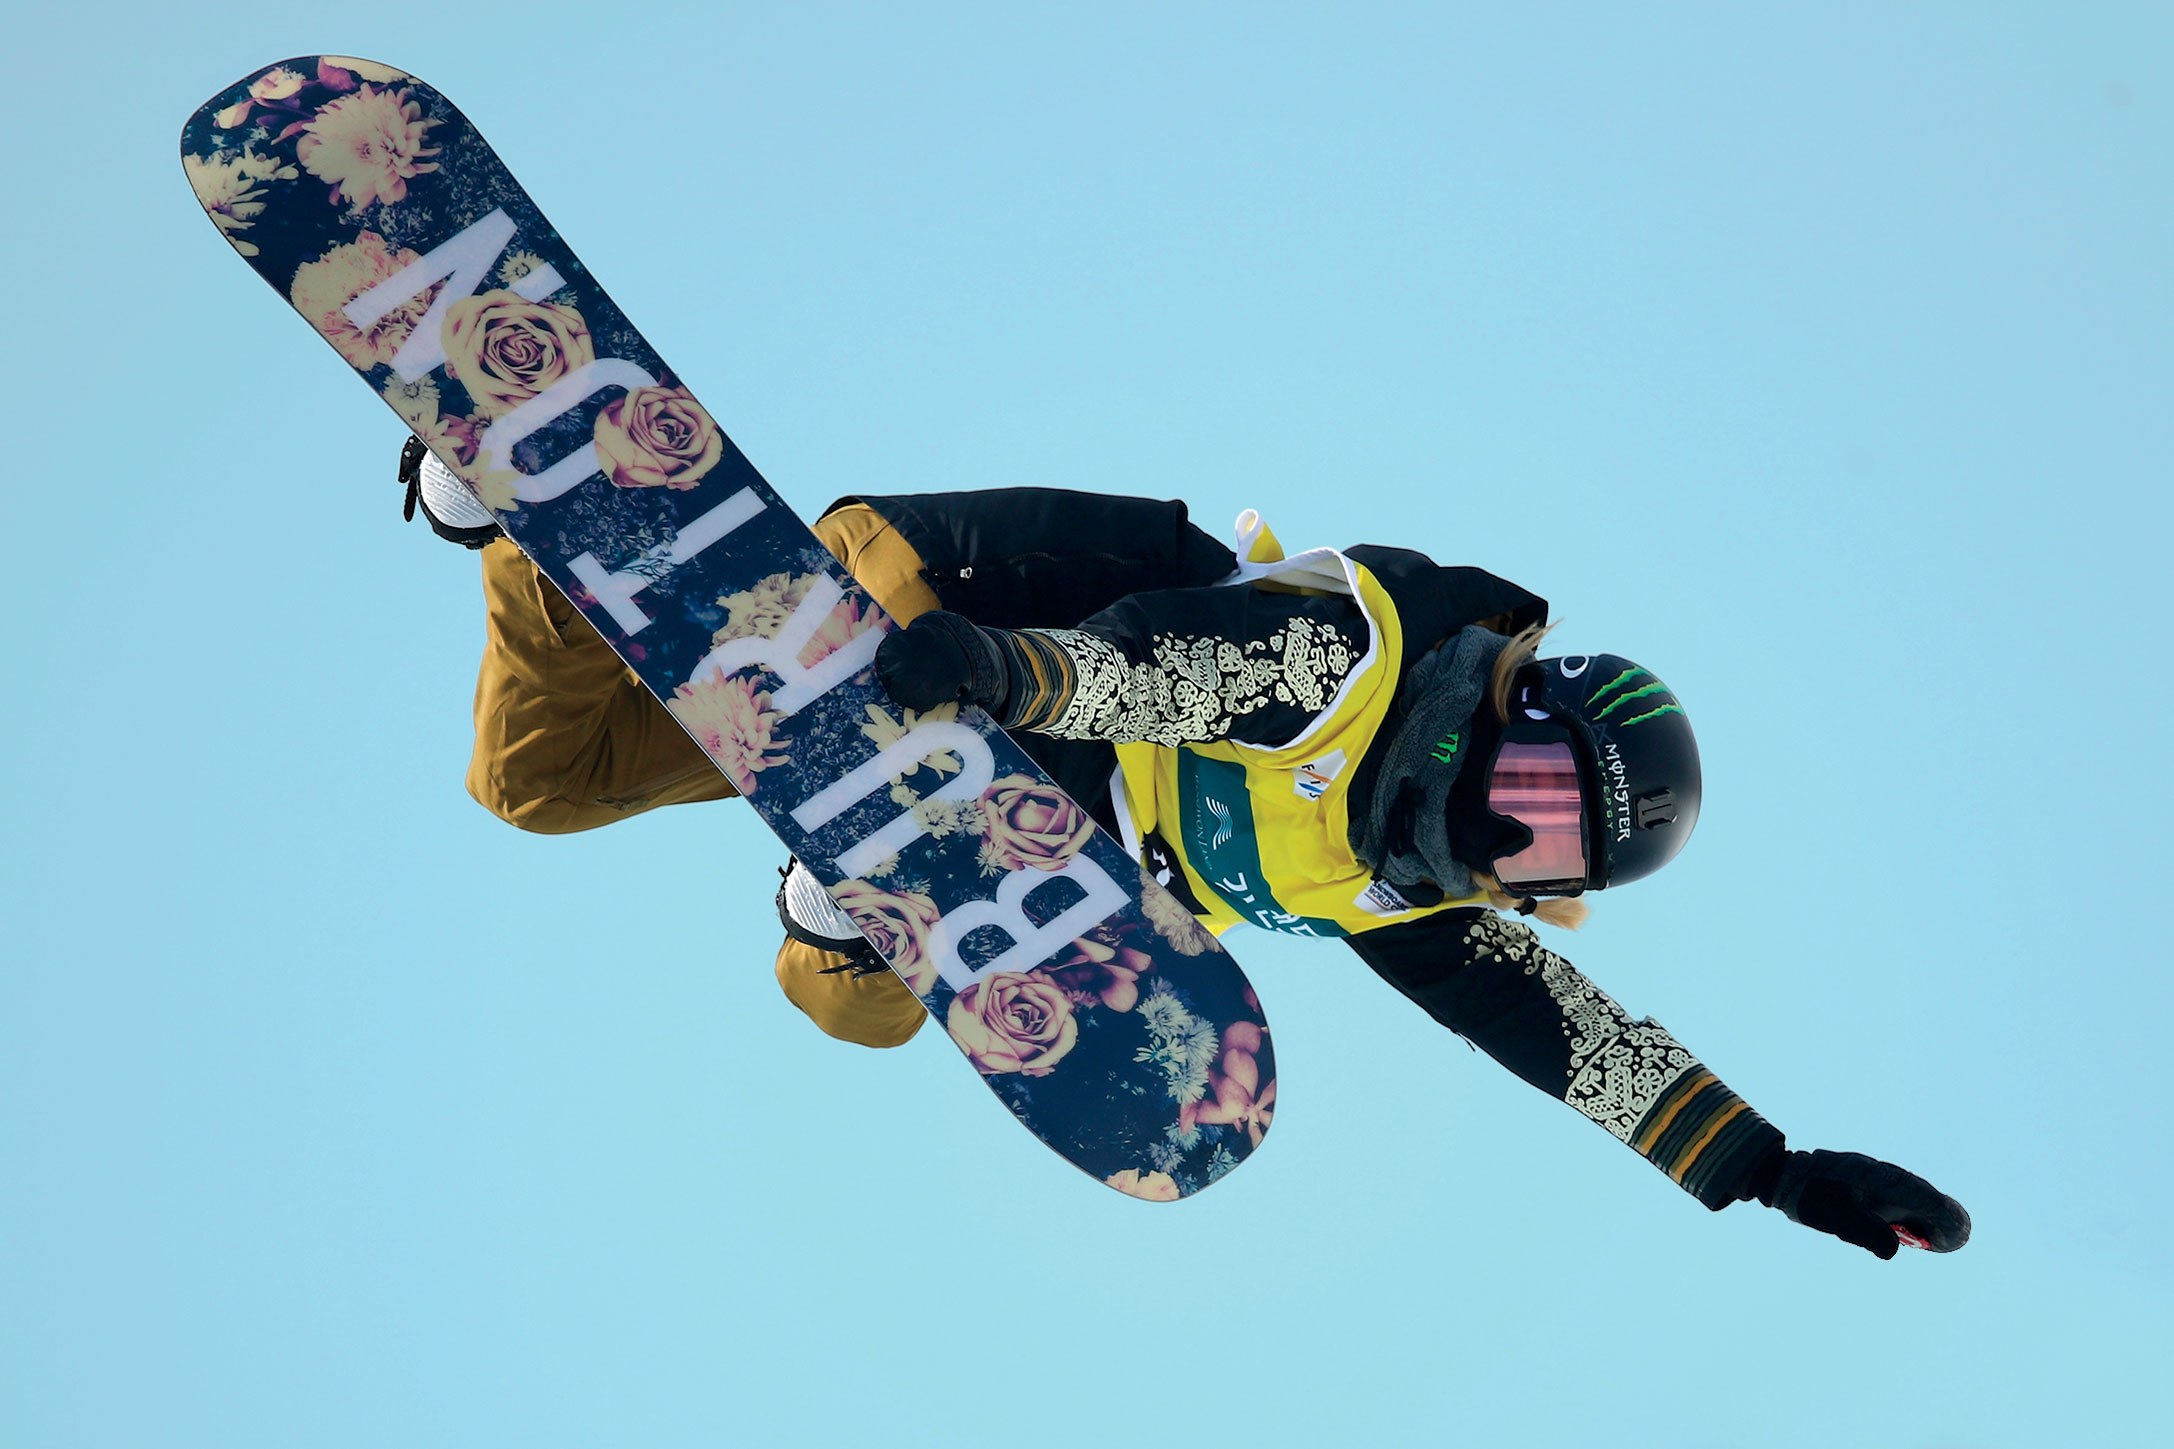 Snowboarder Chloe Kim Defies Much More Than Gravity - Vogue